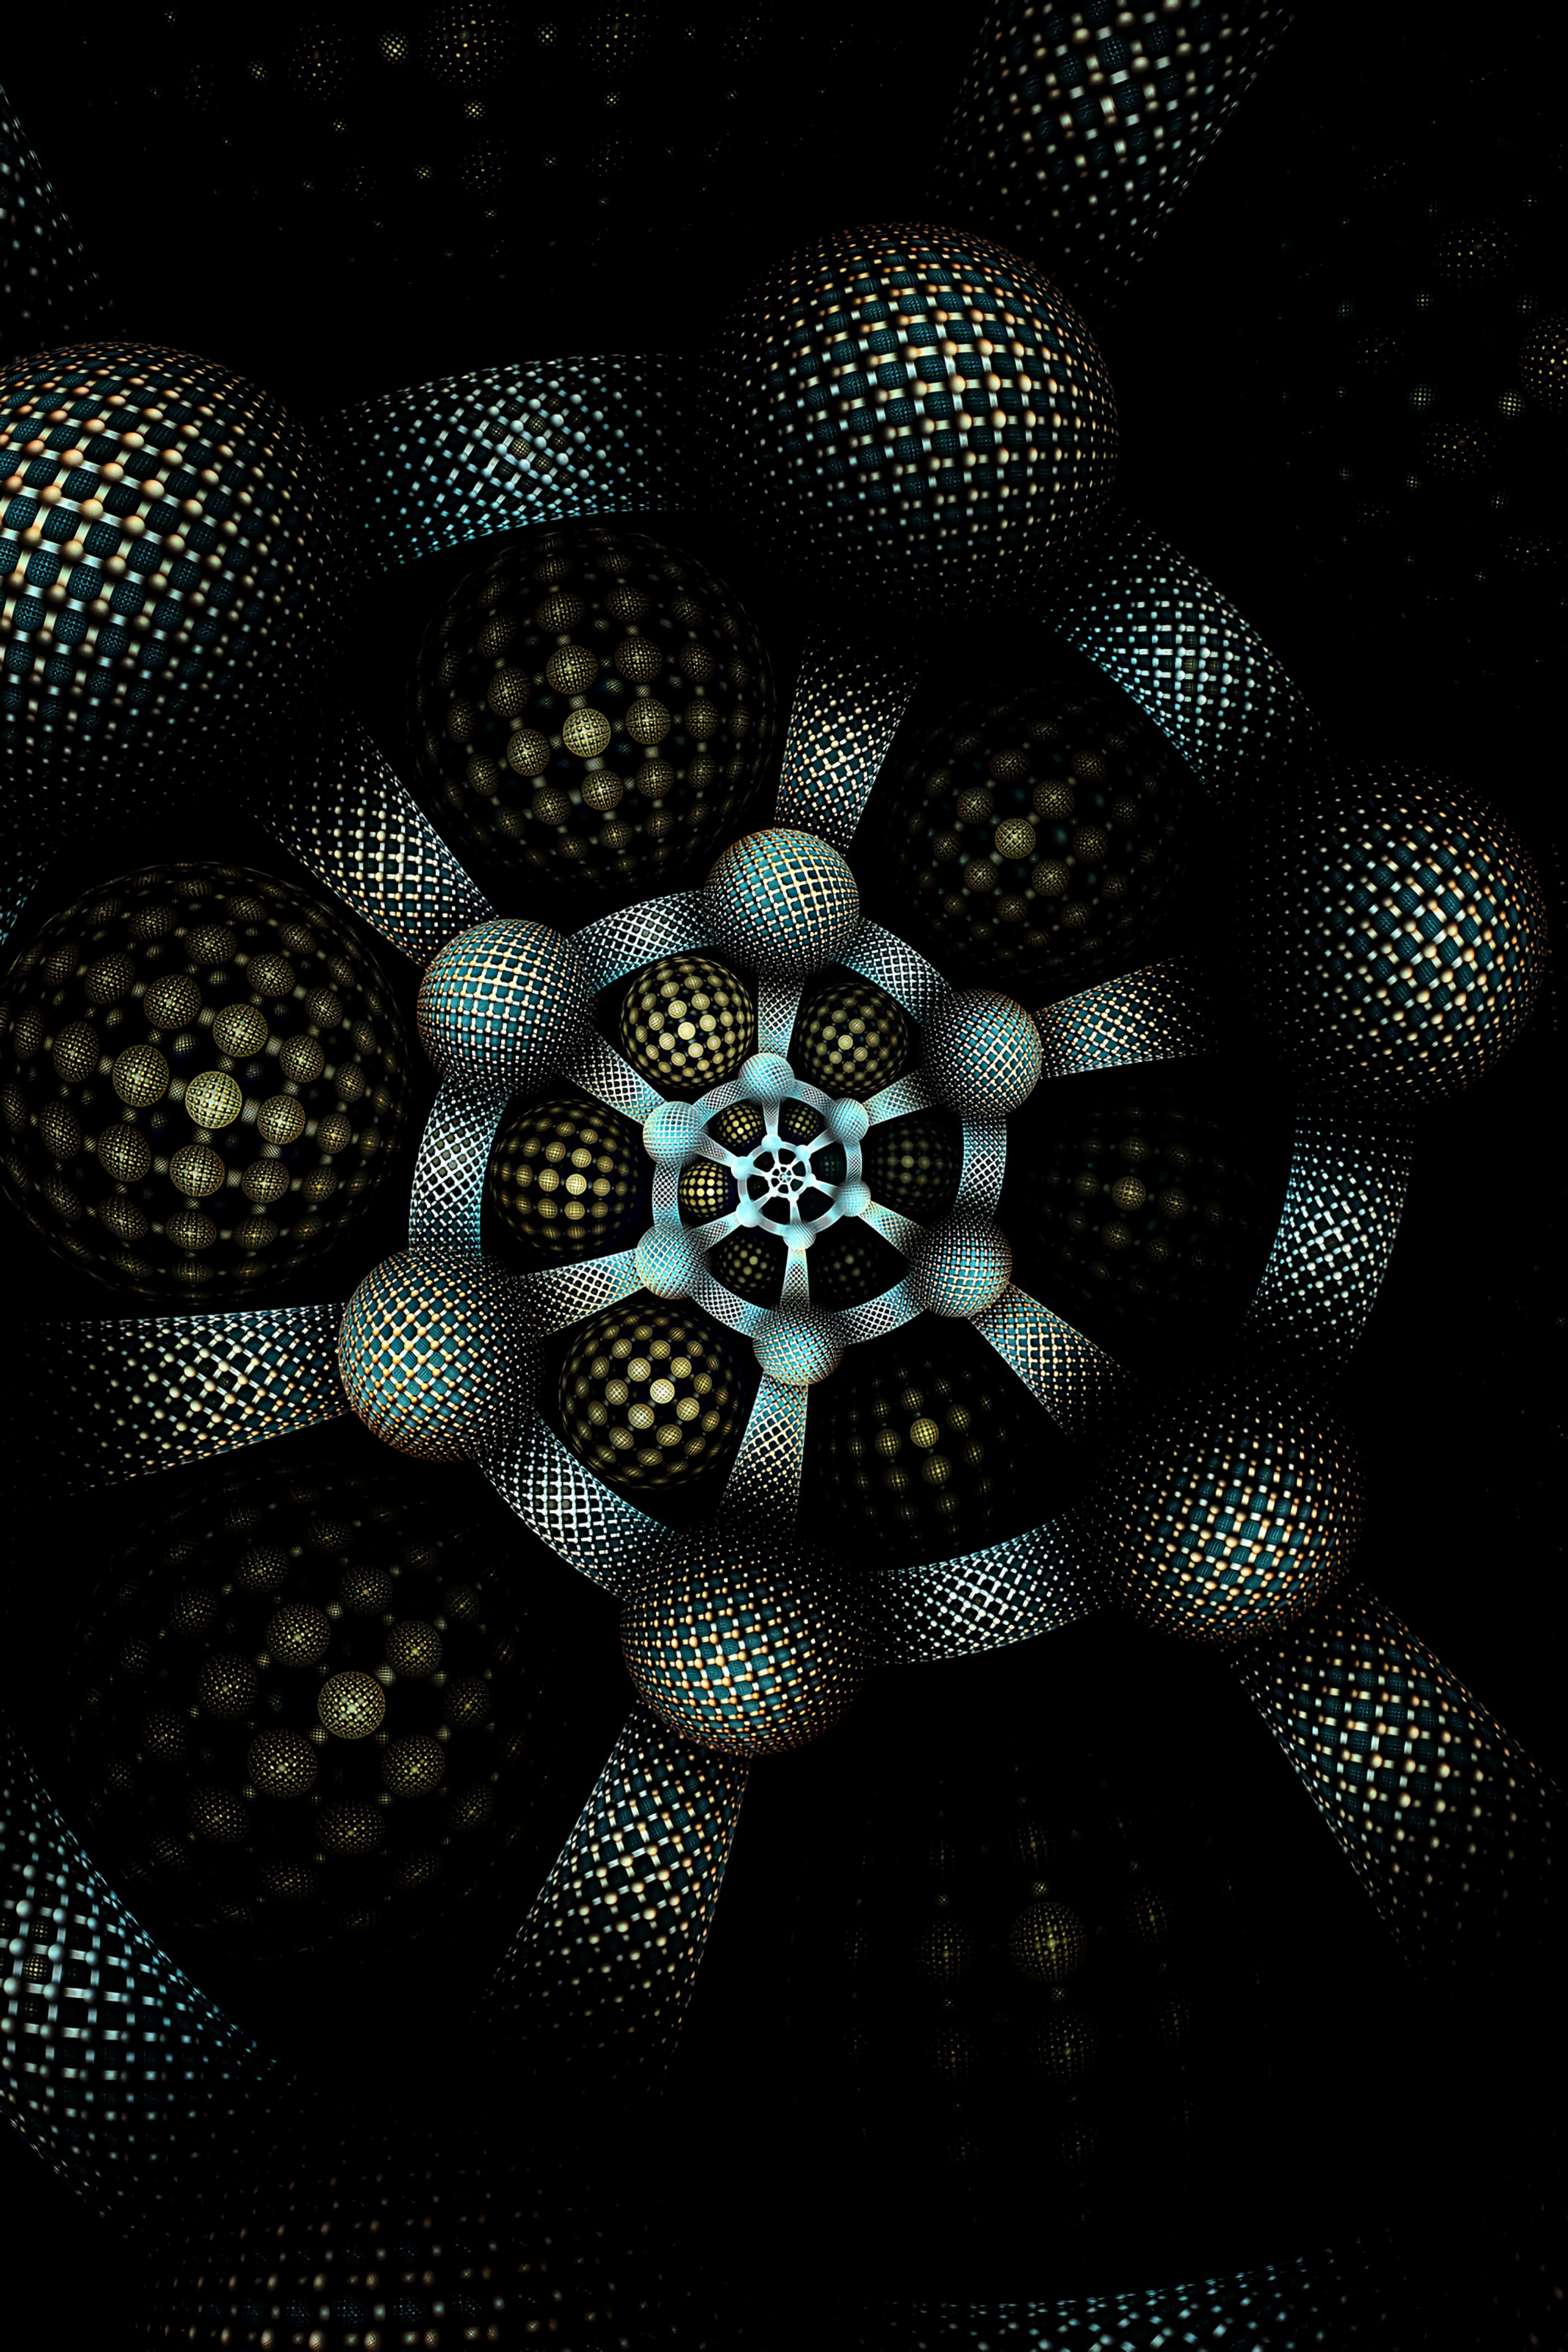 dark, circles, involute, form, abstract, pattern, fractal, swirling UHD